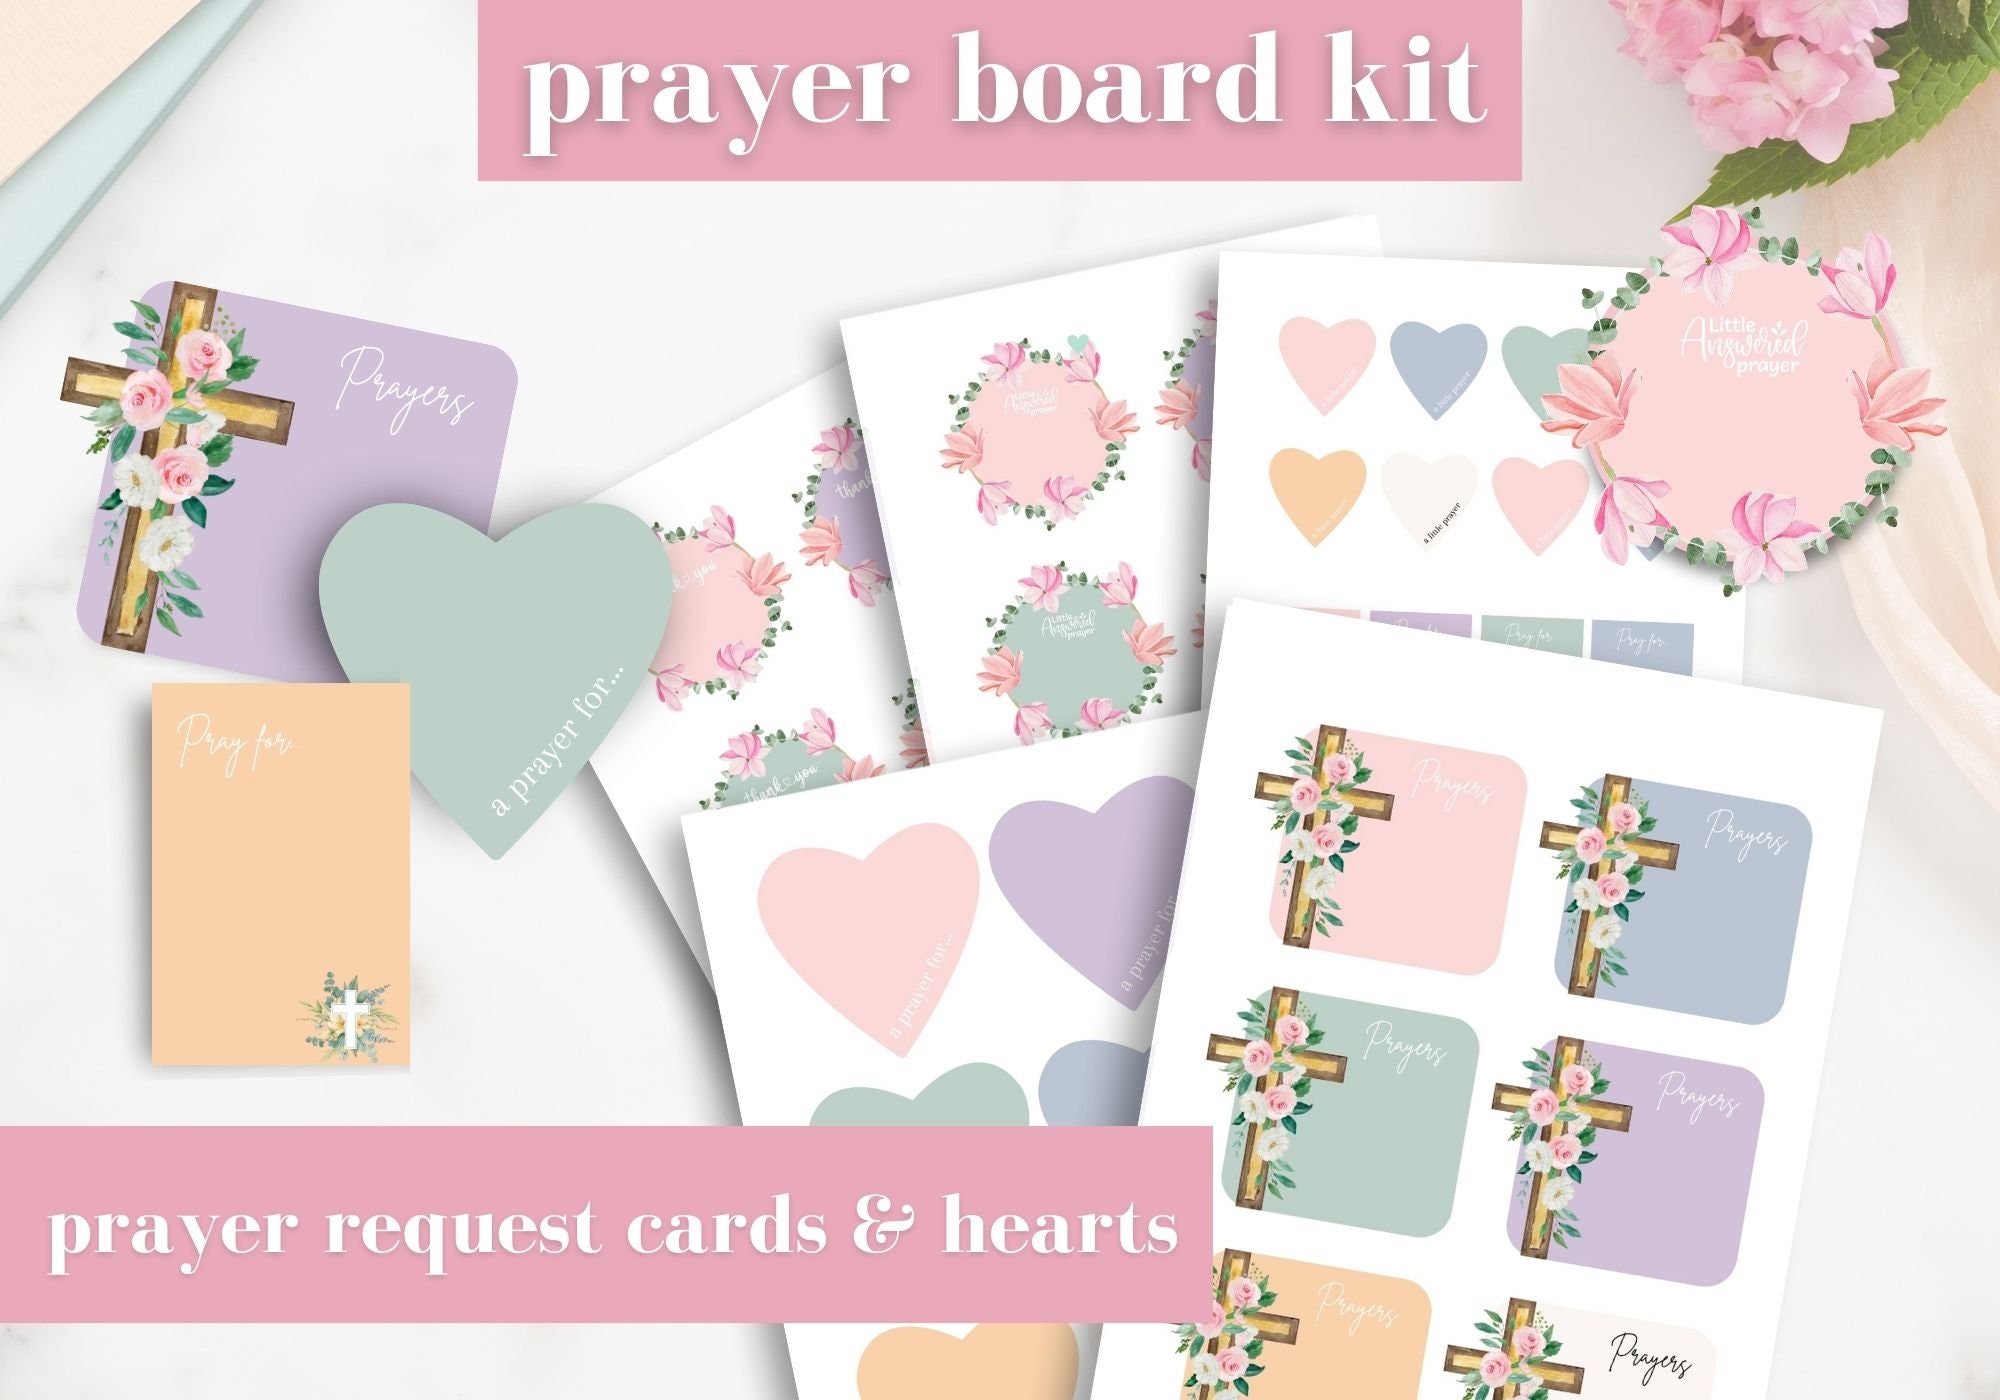 Prayer Board Kit, Prayer Board Printable, Daily Prayer Board, Prayer Wall  Art 